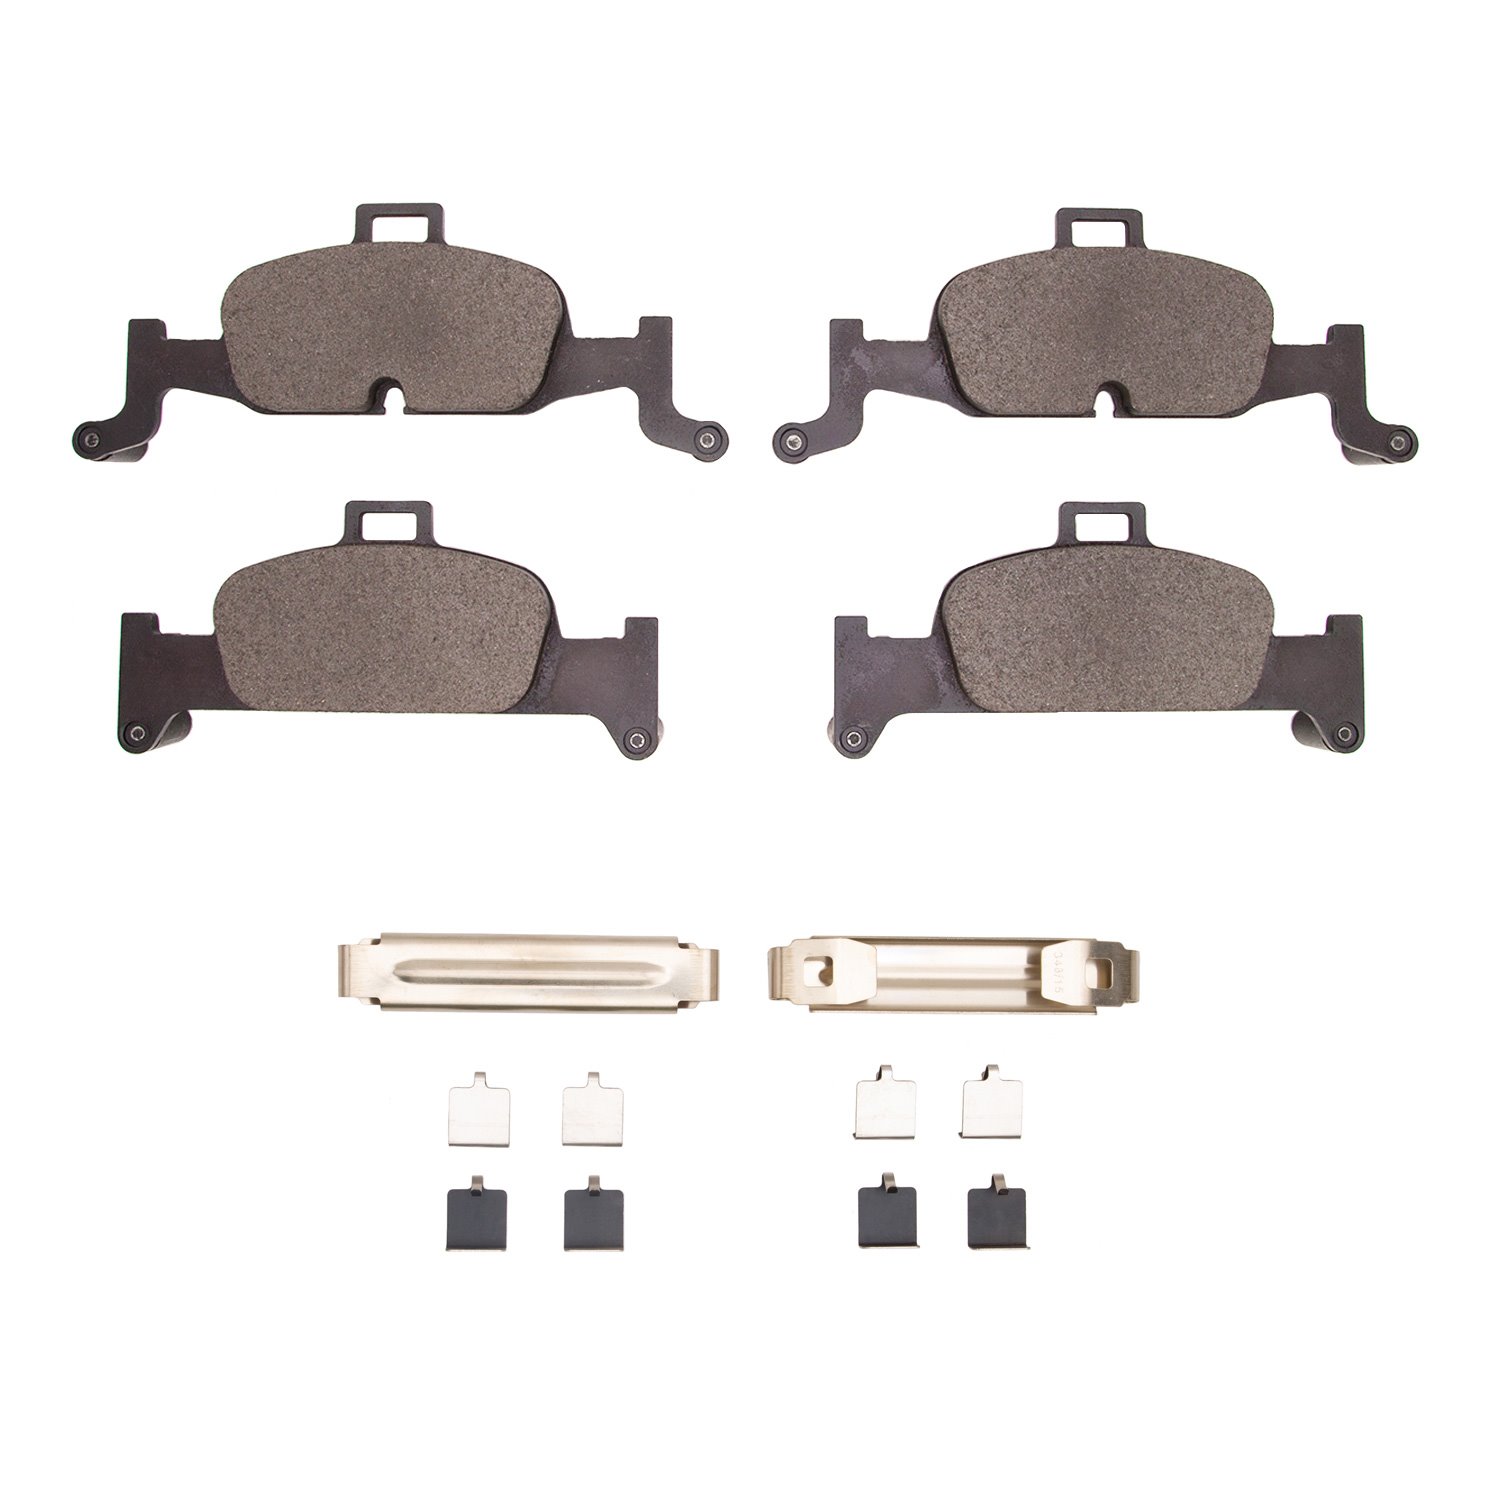 1600-1897-01 5000 Euro Ceramic Brake Pads & Hardware Kit, Fits Select Audi/Volkswagen, Position: Front